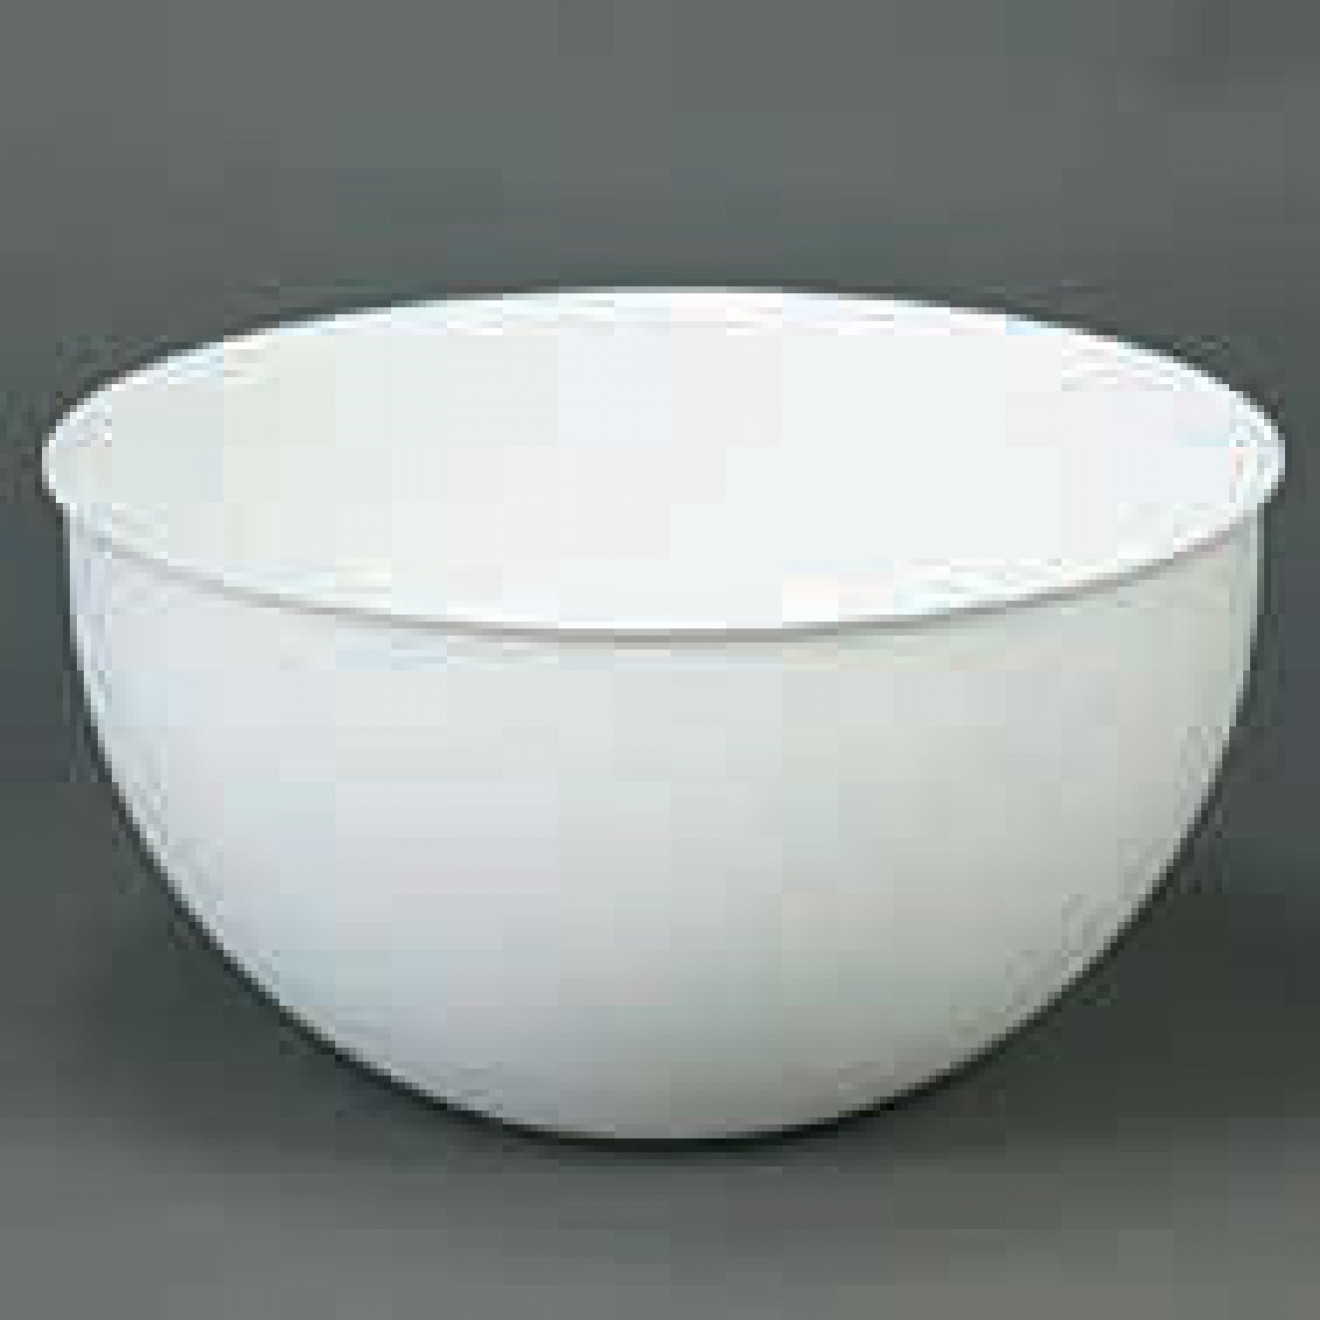 Bowl 4.2 Pints (2 liters) translucent white